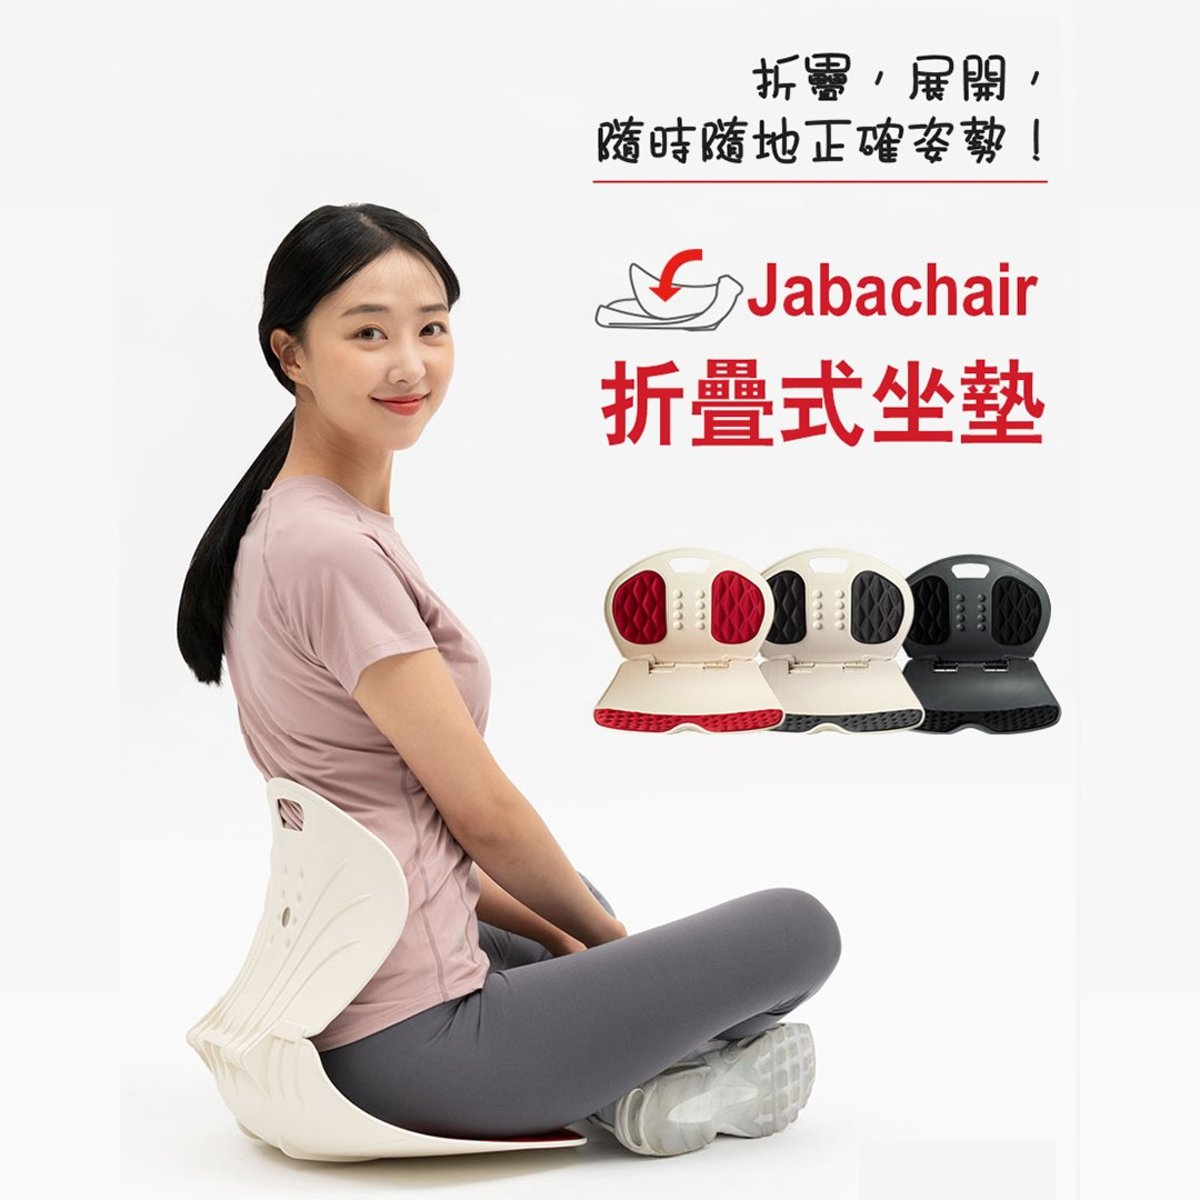 Jaba - Made in Korea Jabachair foldable spine cushion